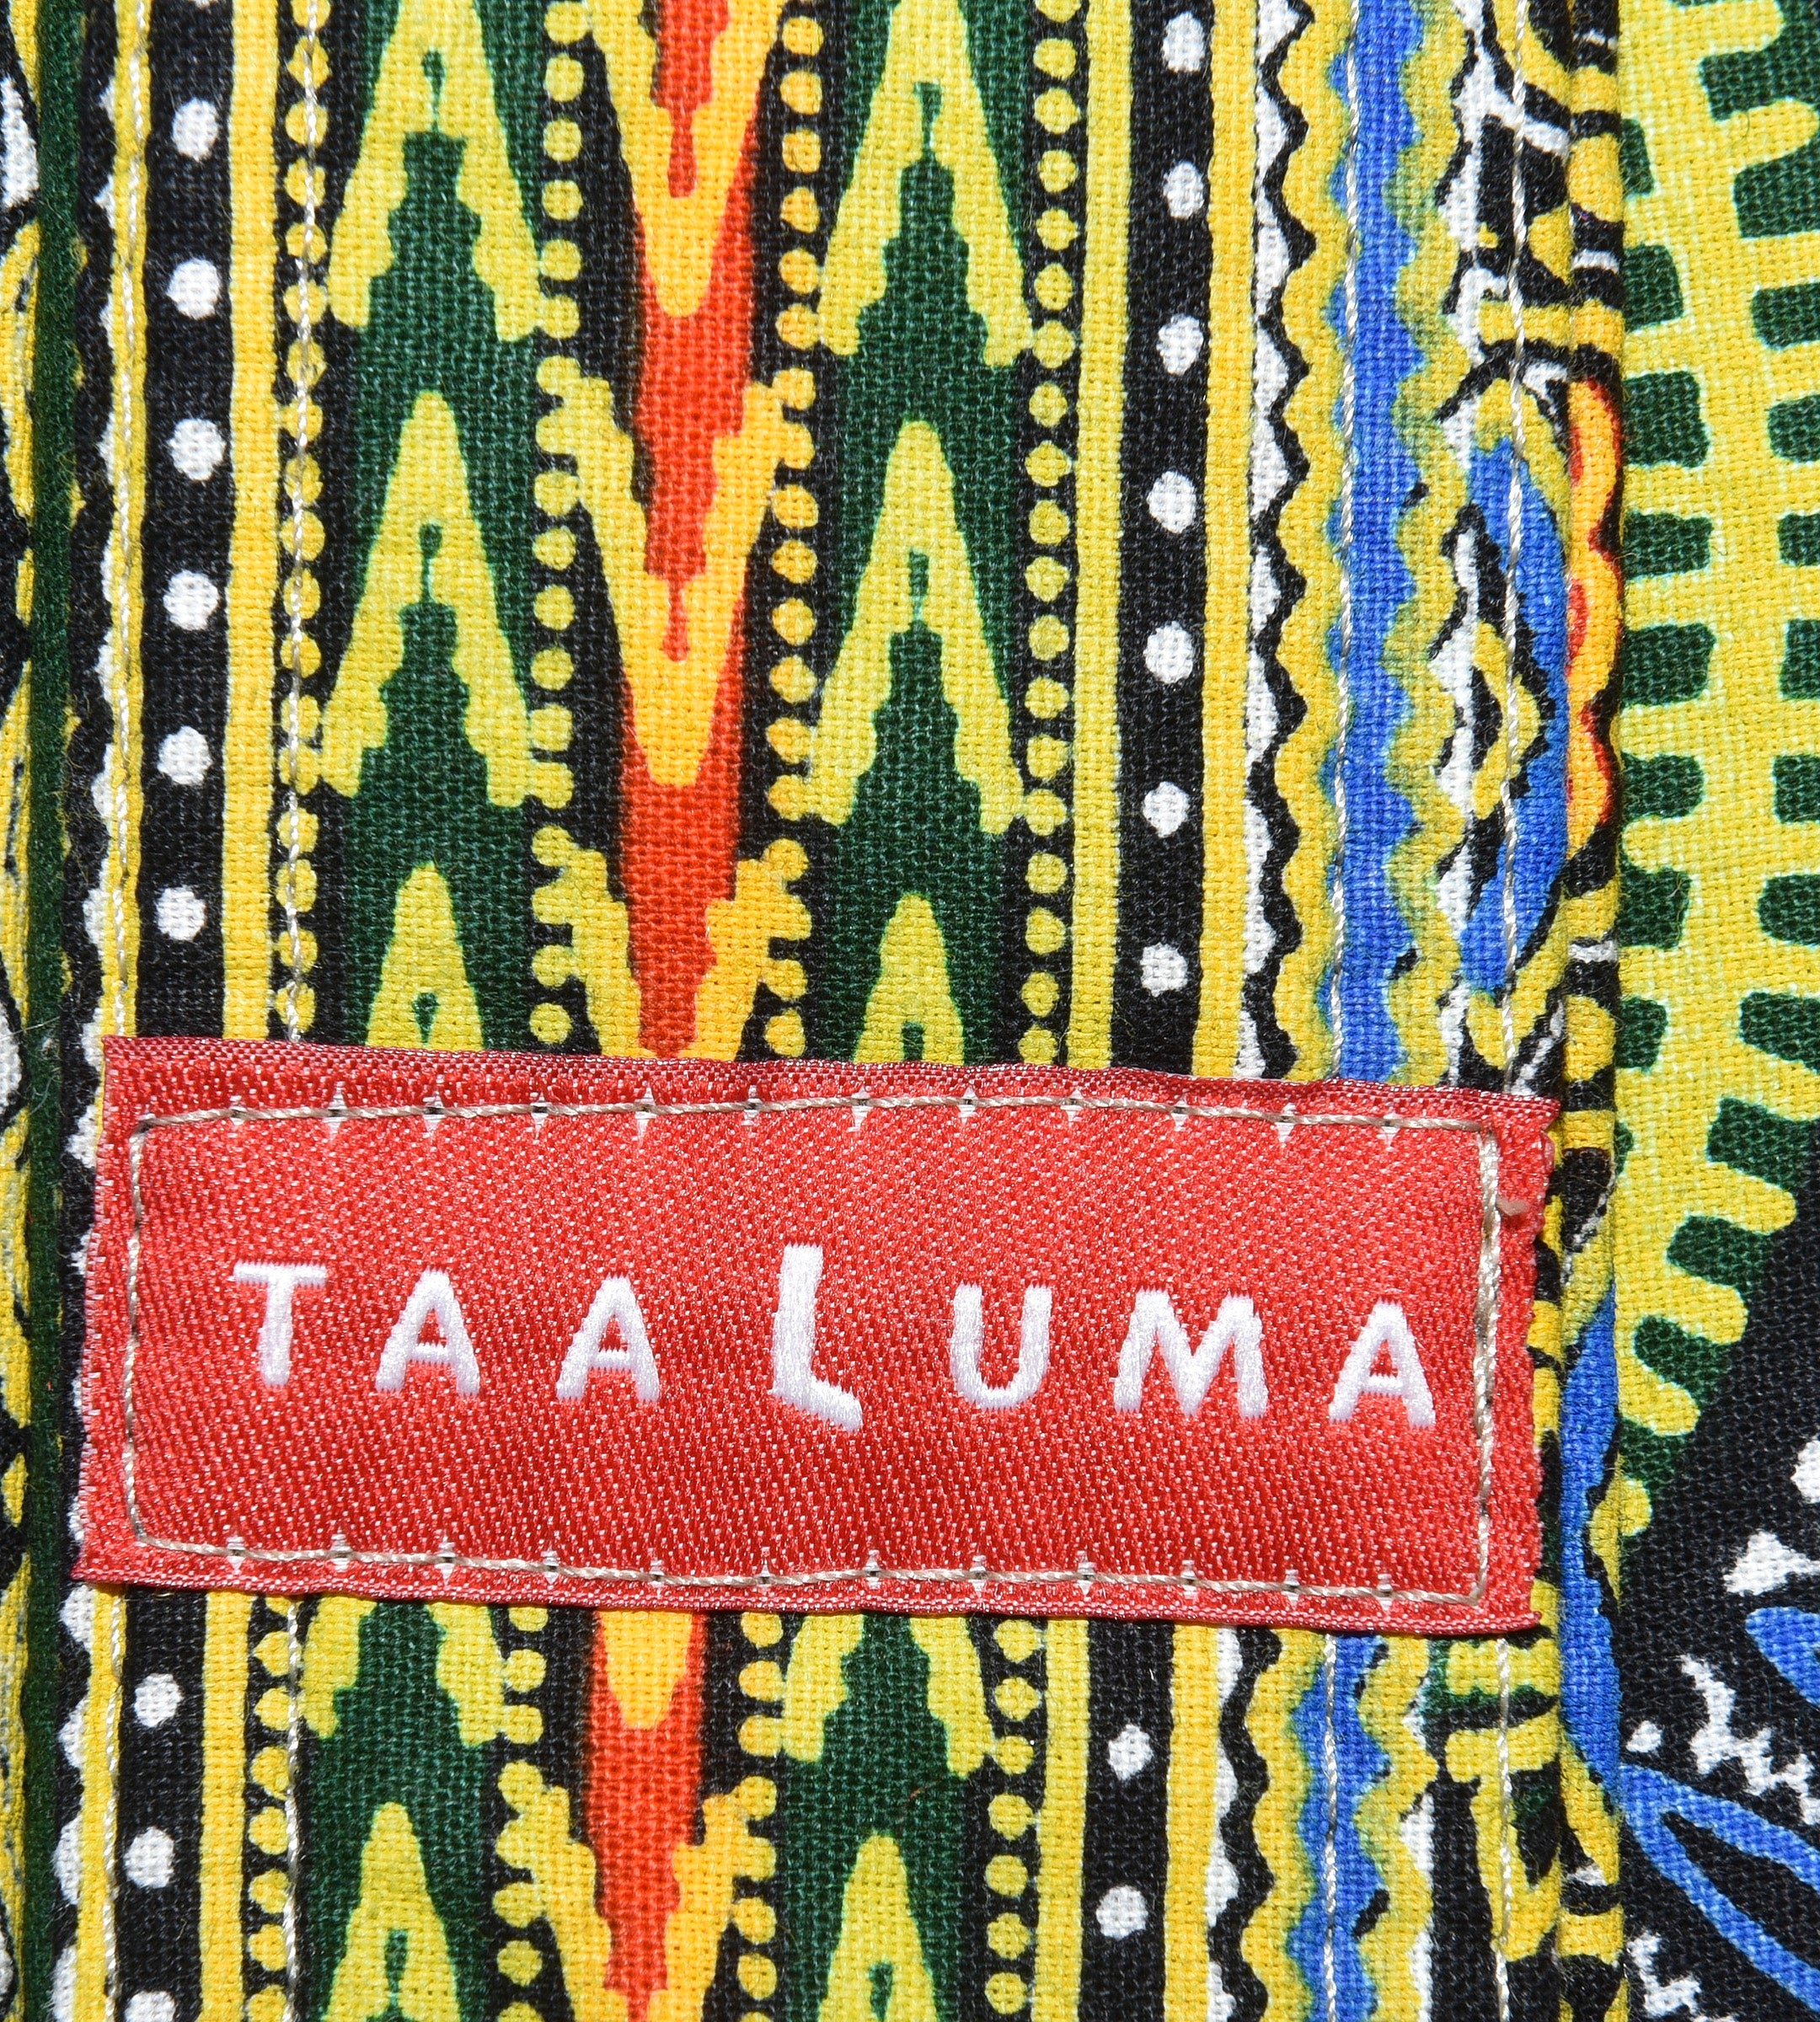 Tanzania Tote (by Liz Lerner)